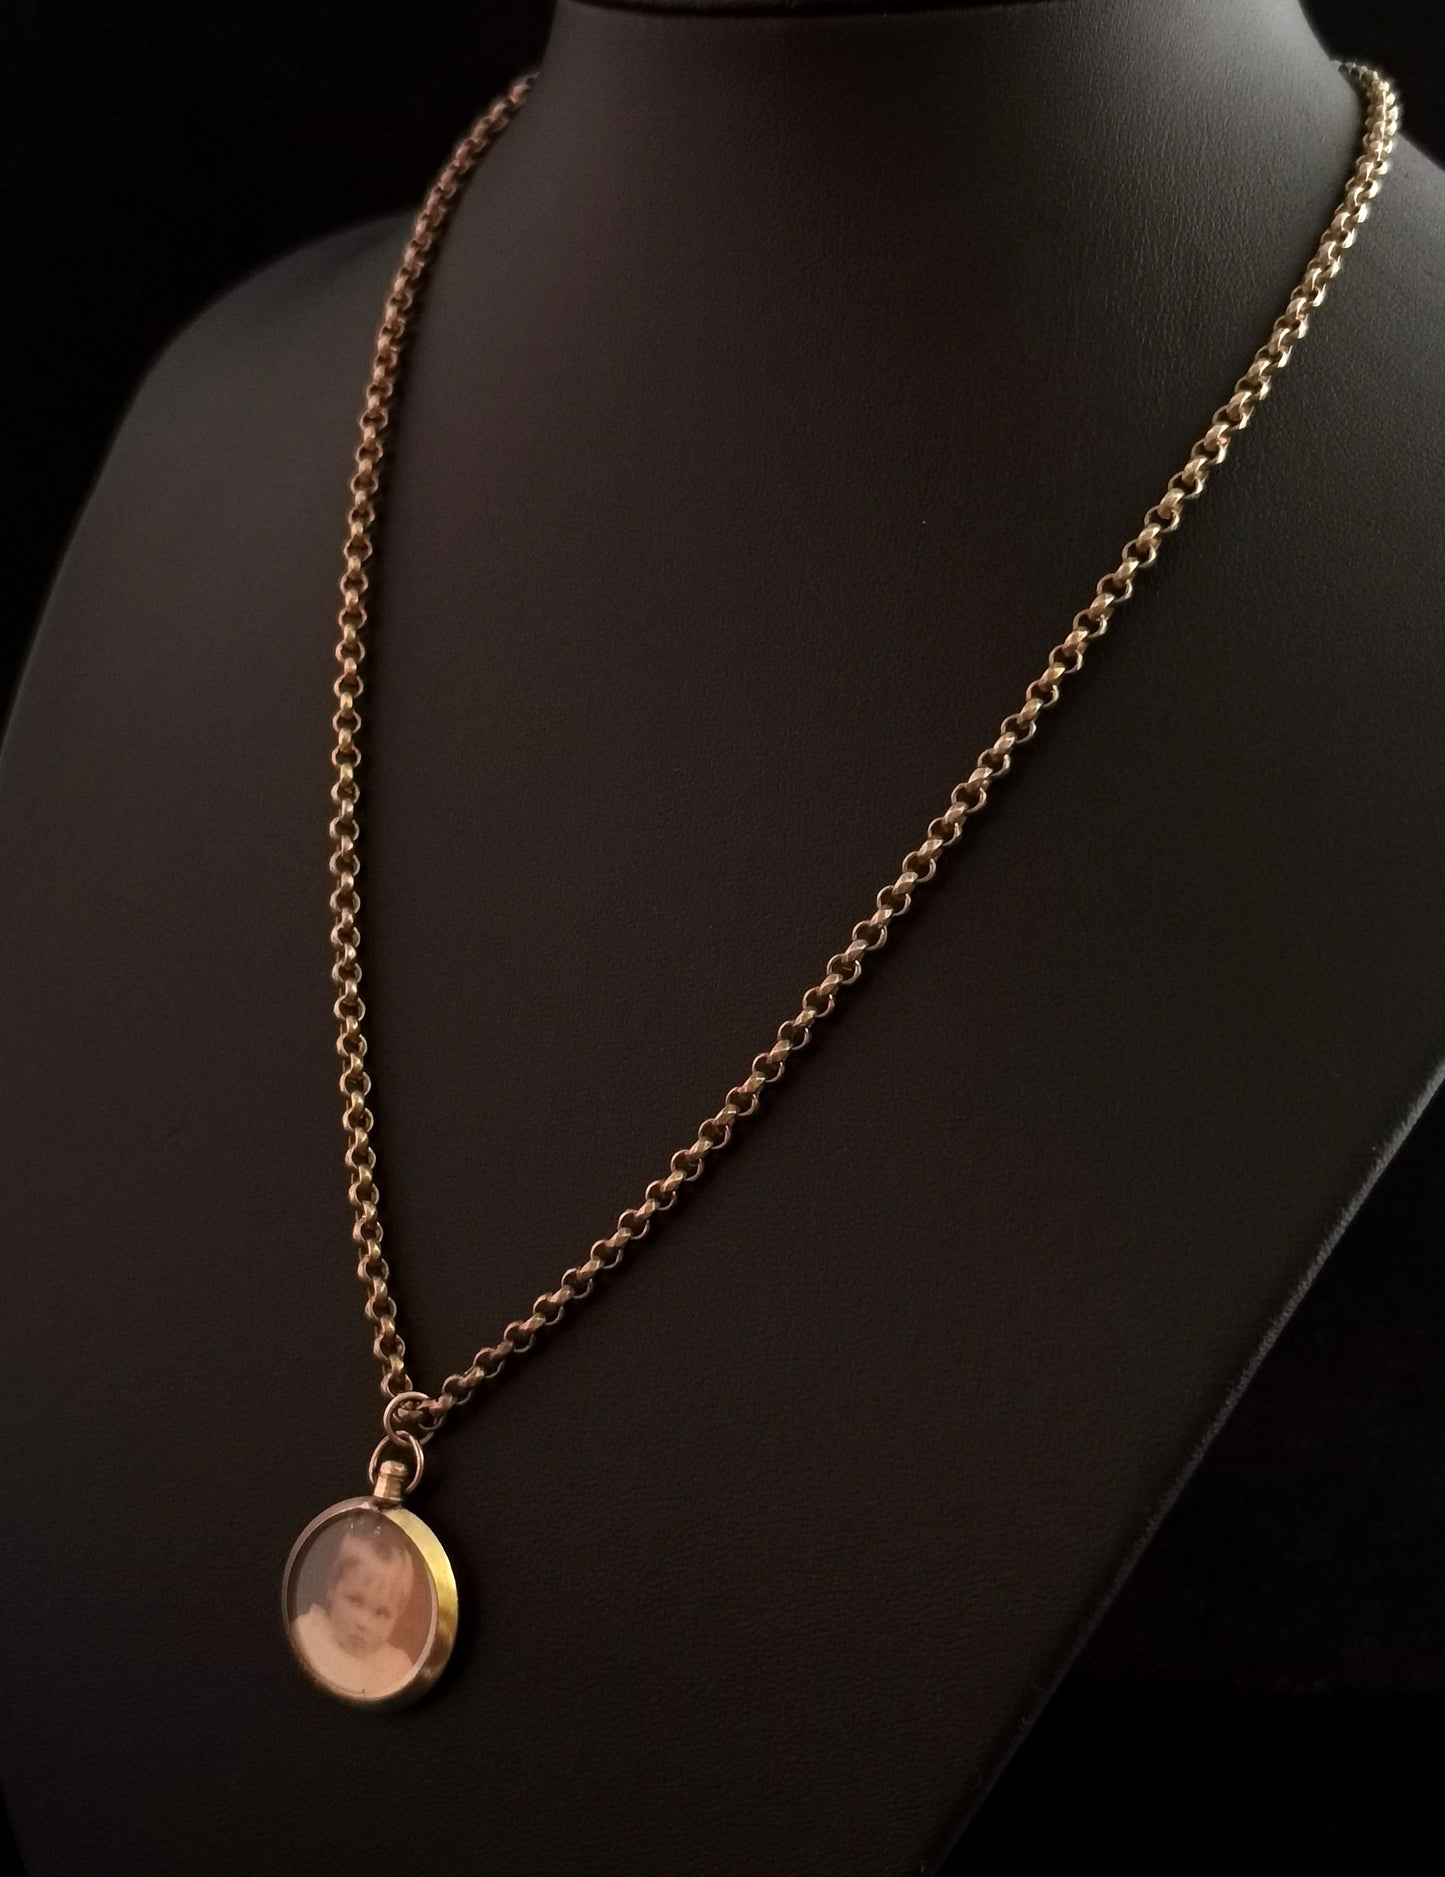 Antique rolled gold portrait locket, belcher chain necklace